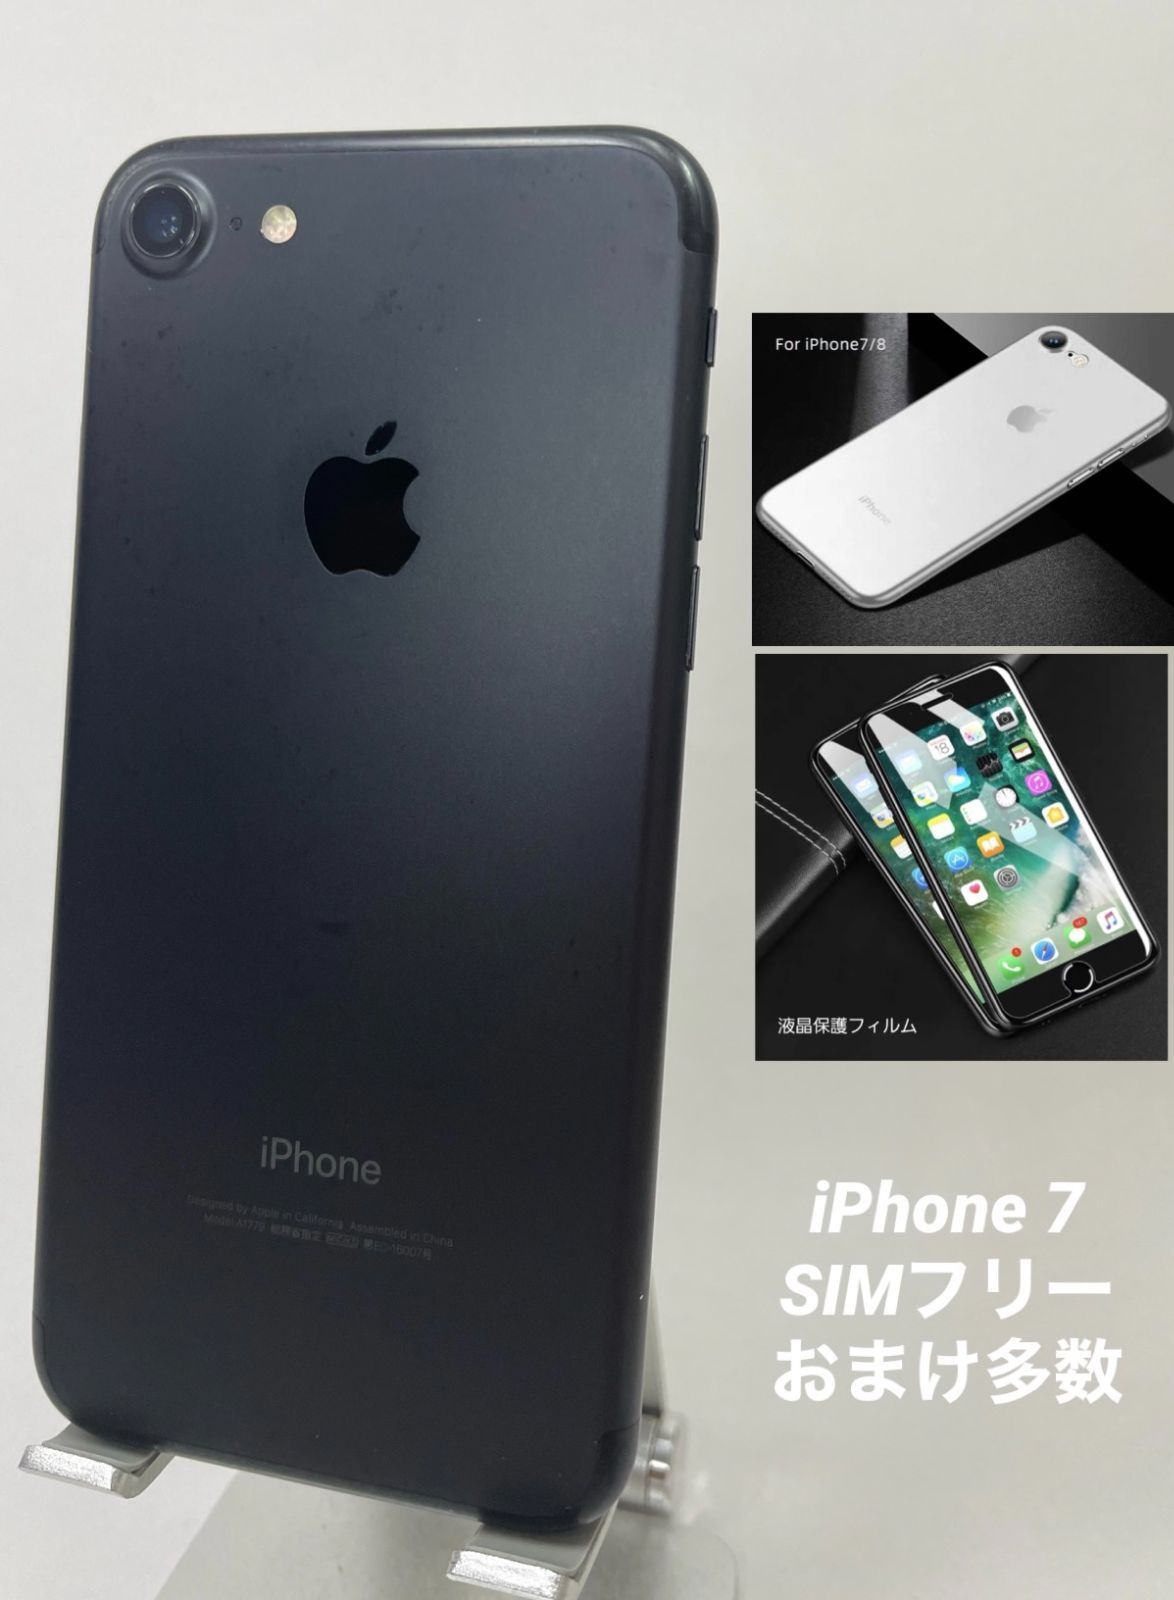 A 100% iPhone 7 Black 128 GB SIMフリ本体 - スマートフォン本体